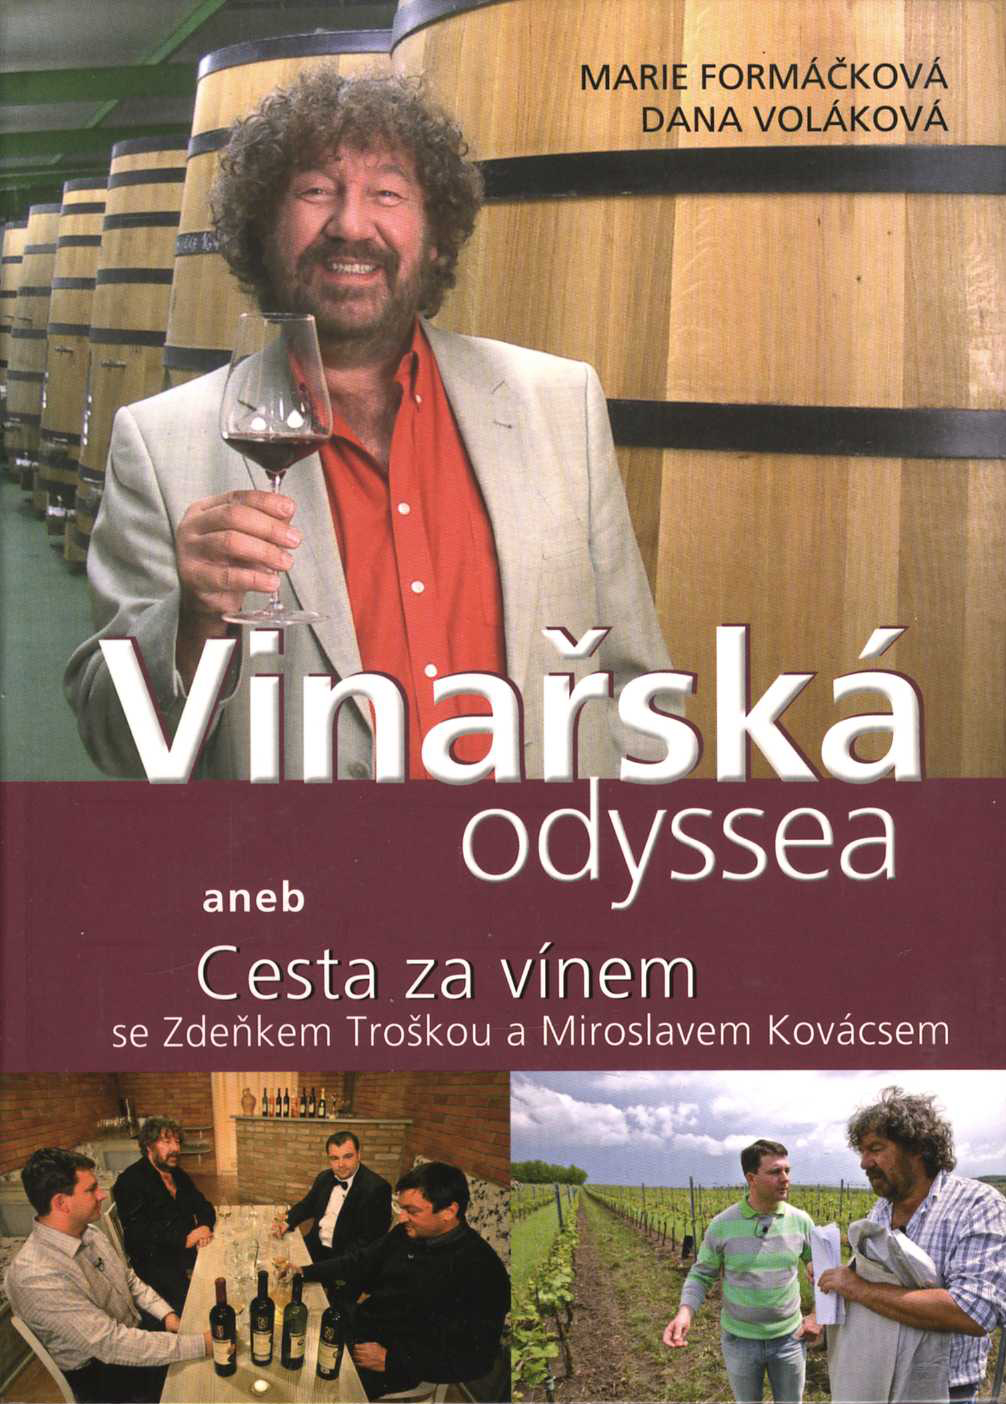 Vinařská odyssea (Dana Voláková, Marie Formáčková)